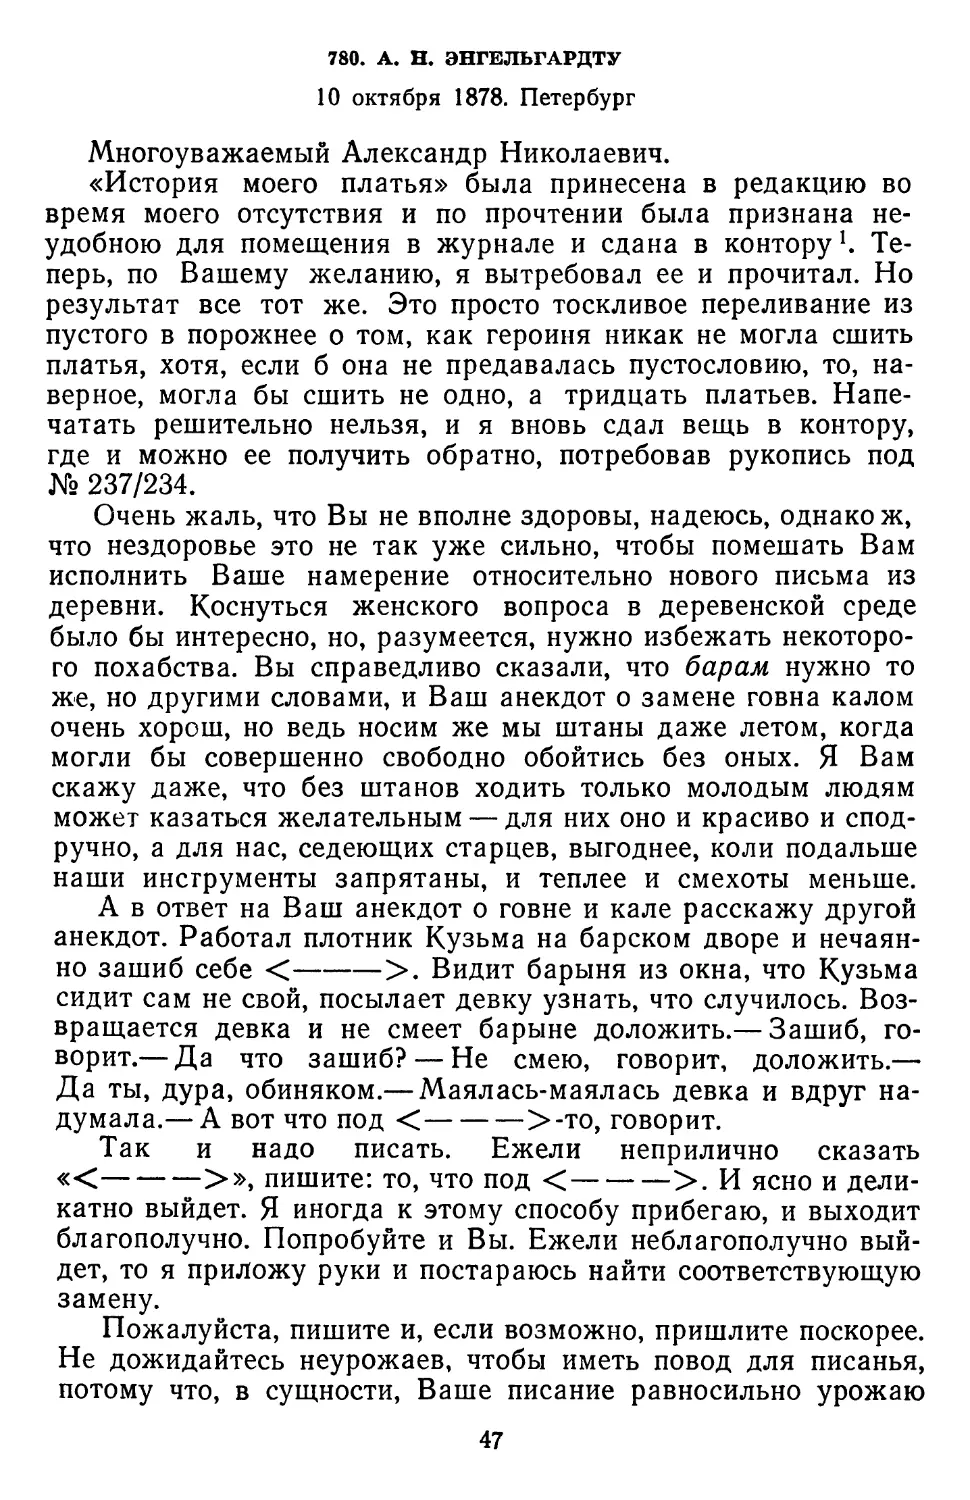 780.А. Н. Энгельгардту.10 октября 1878. Петербург